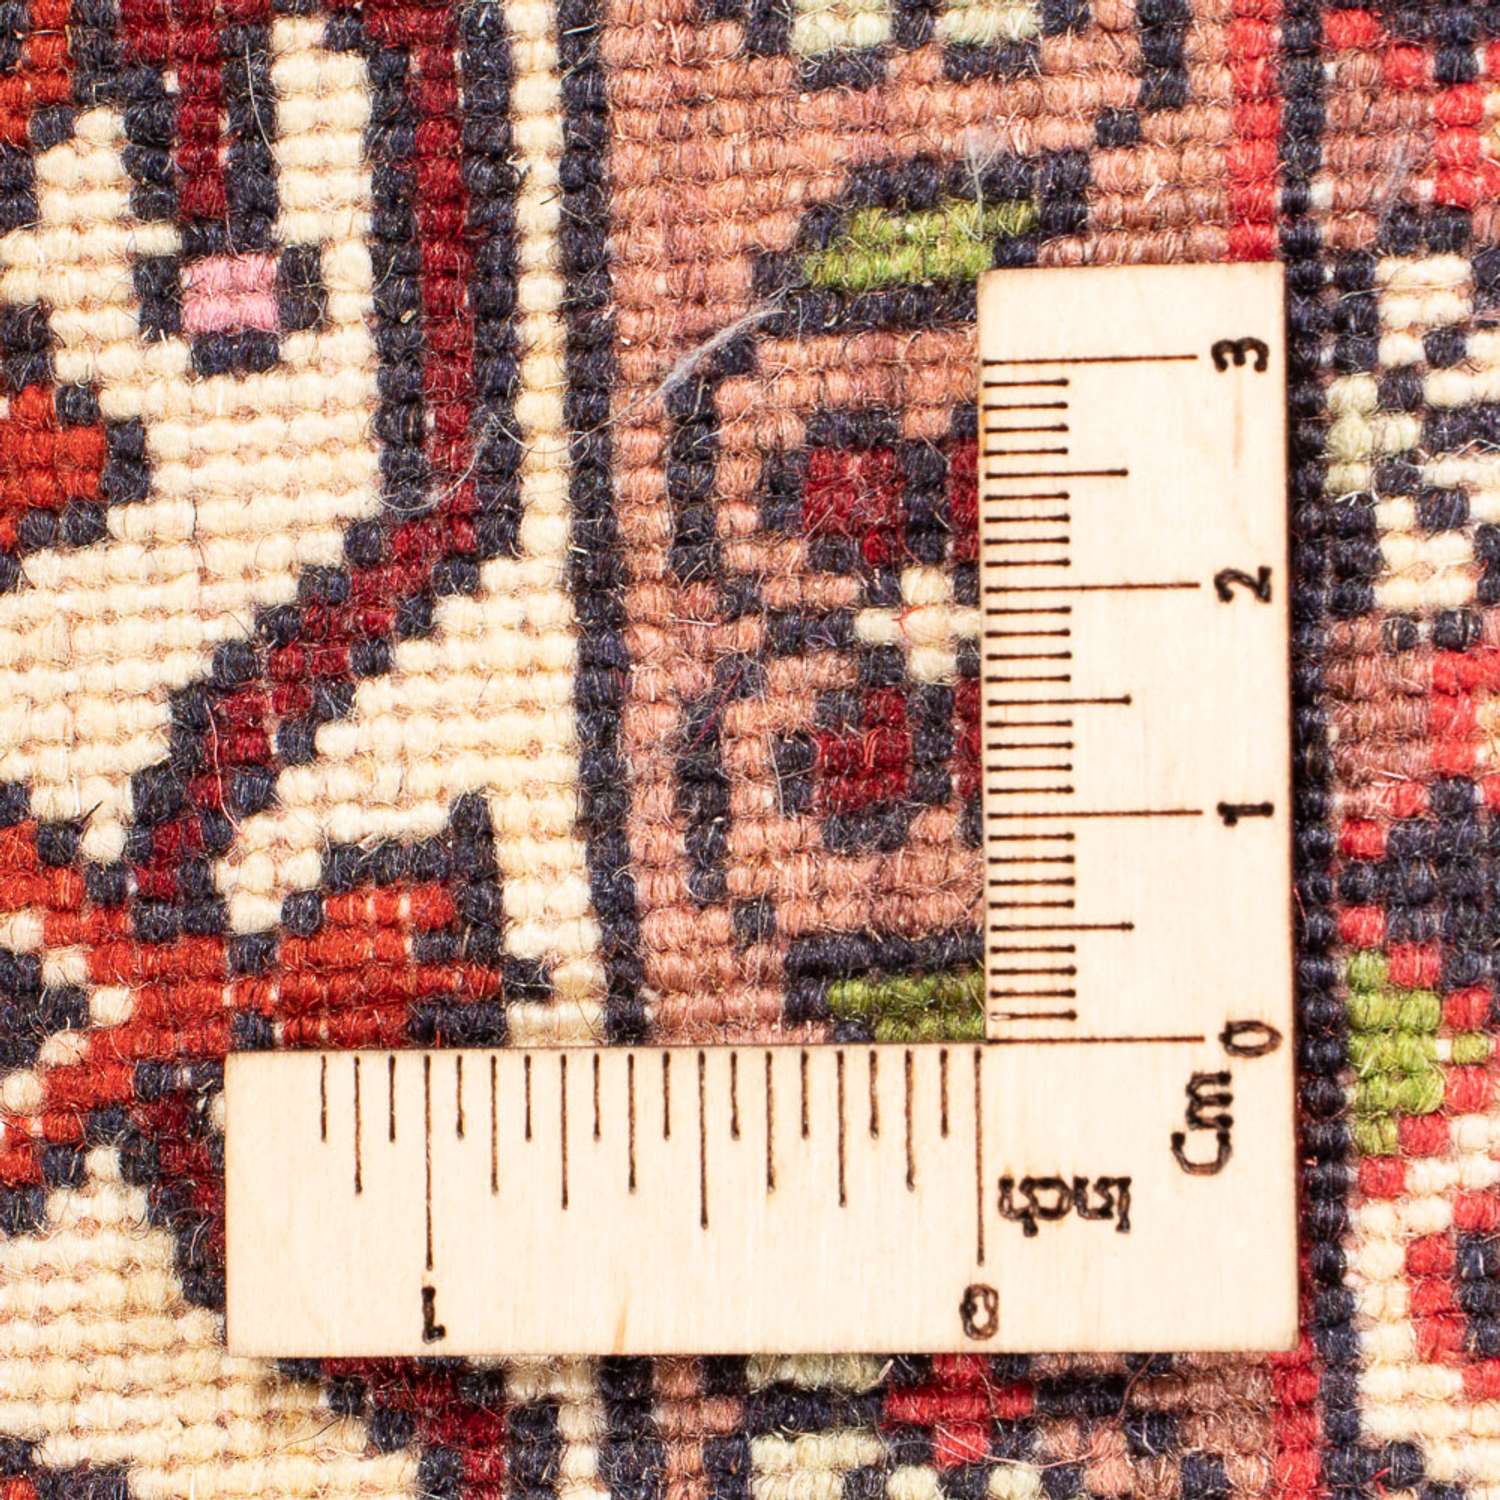 Perský koberec - Bijar - Královský - 150 x 87 cm - červená